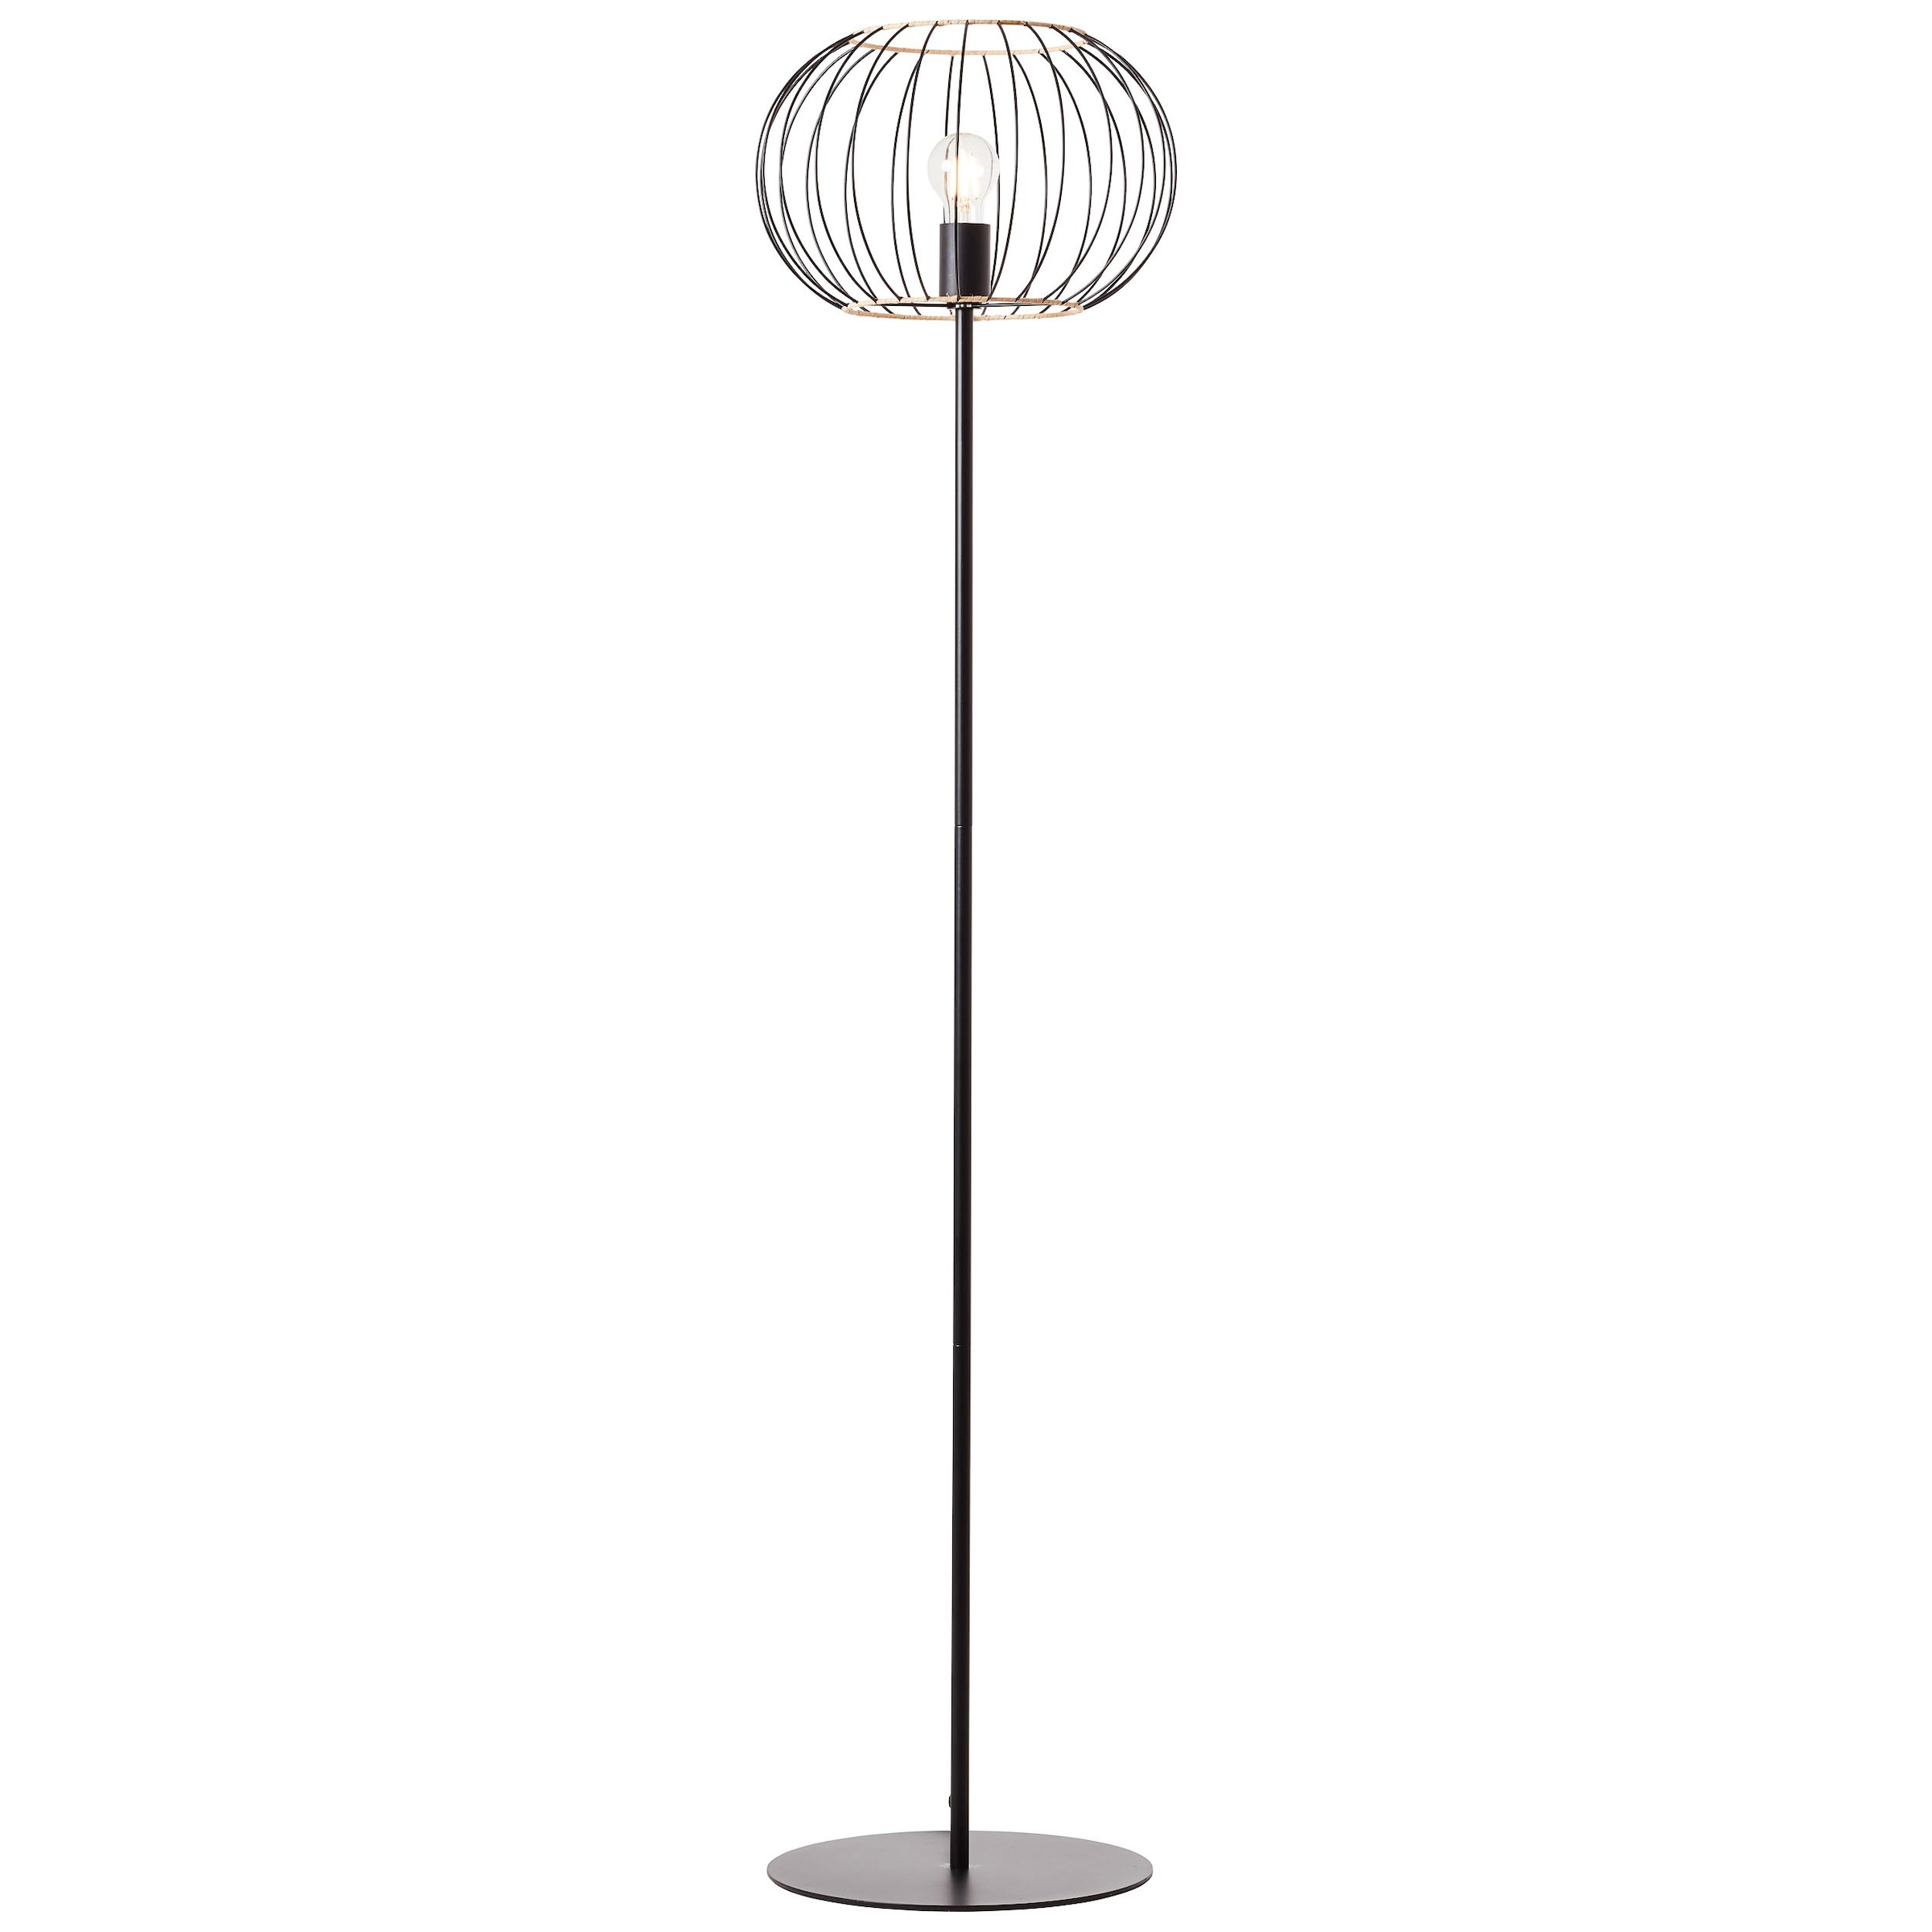 Brilliant Stehlampe »Silemia«, 1 flammig-flammig, 151,5 cm Höhe, Ø 36 cm, E27, Metall/Rattan, schwarz matt